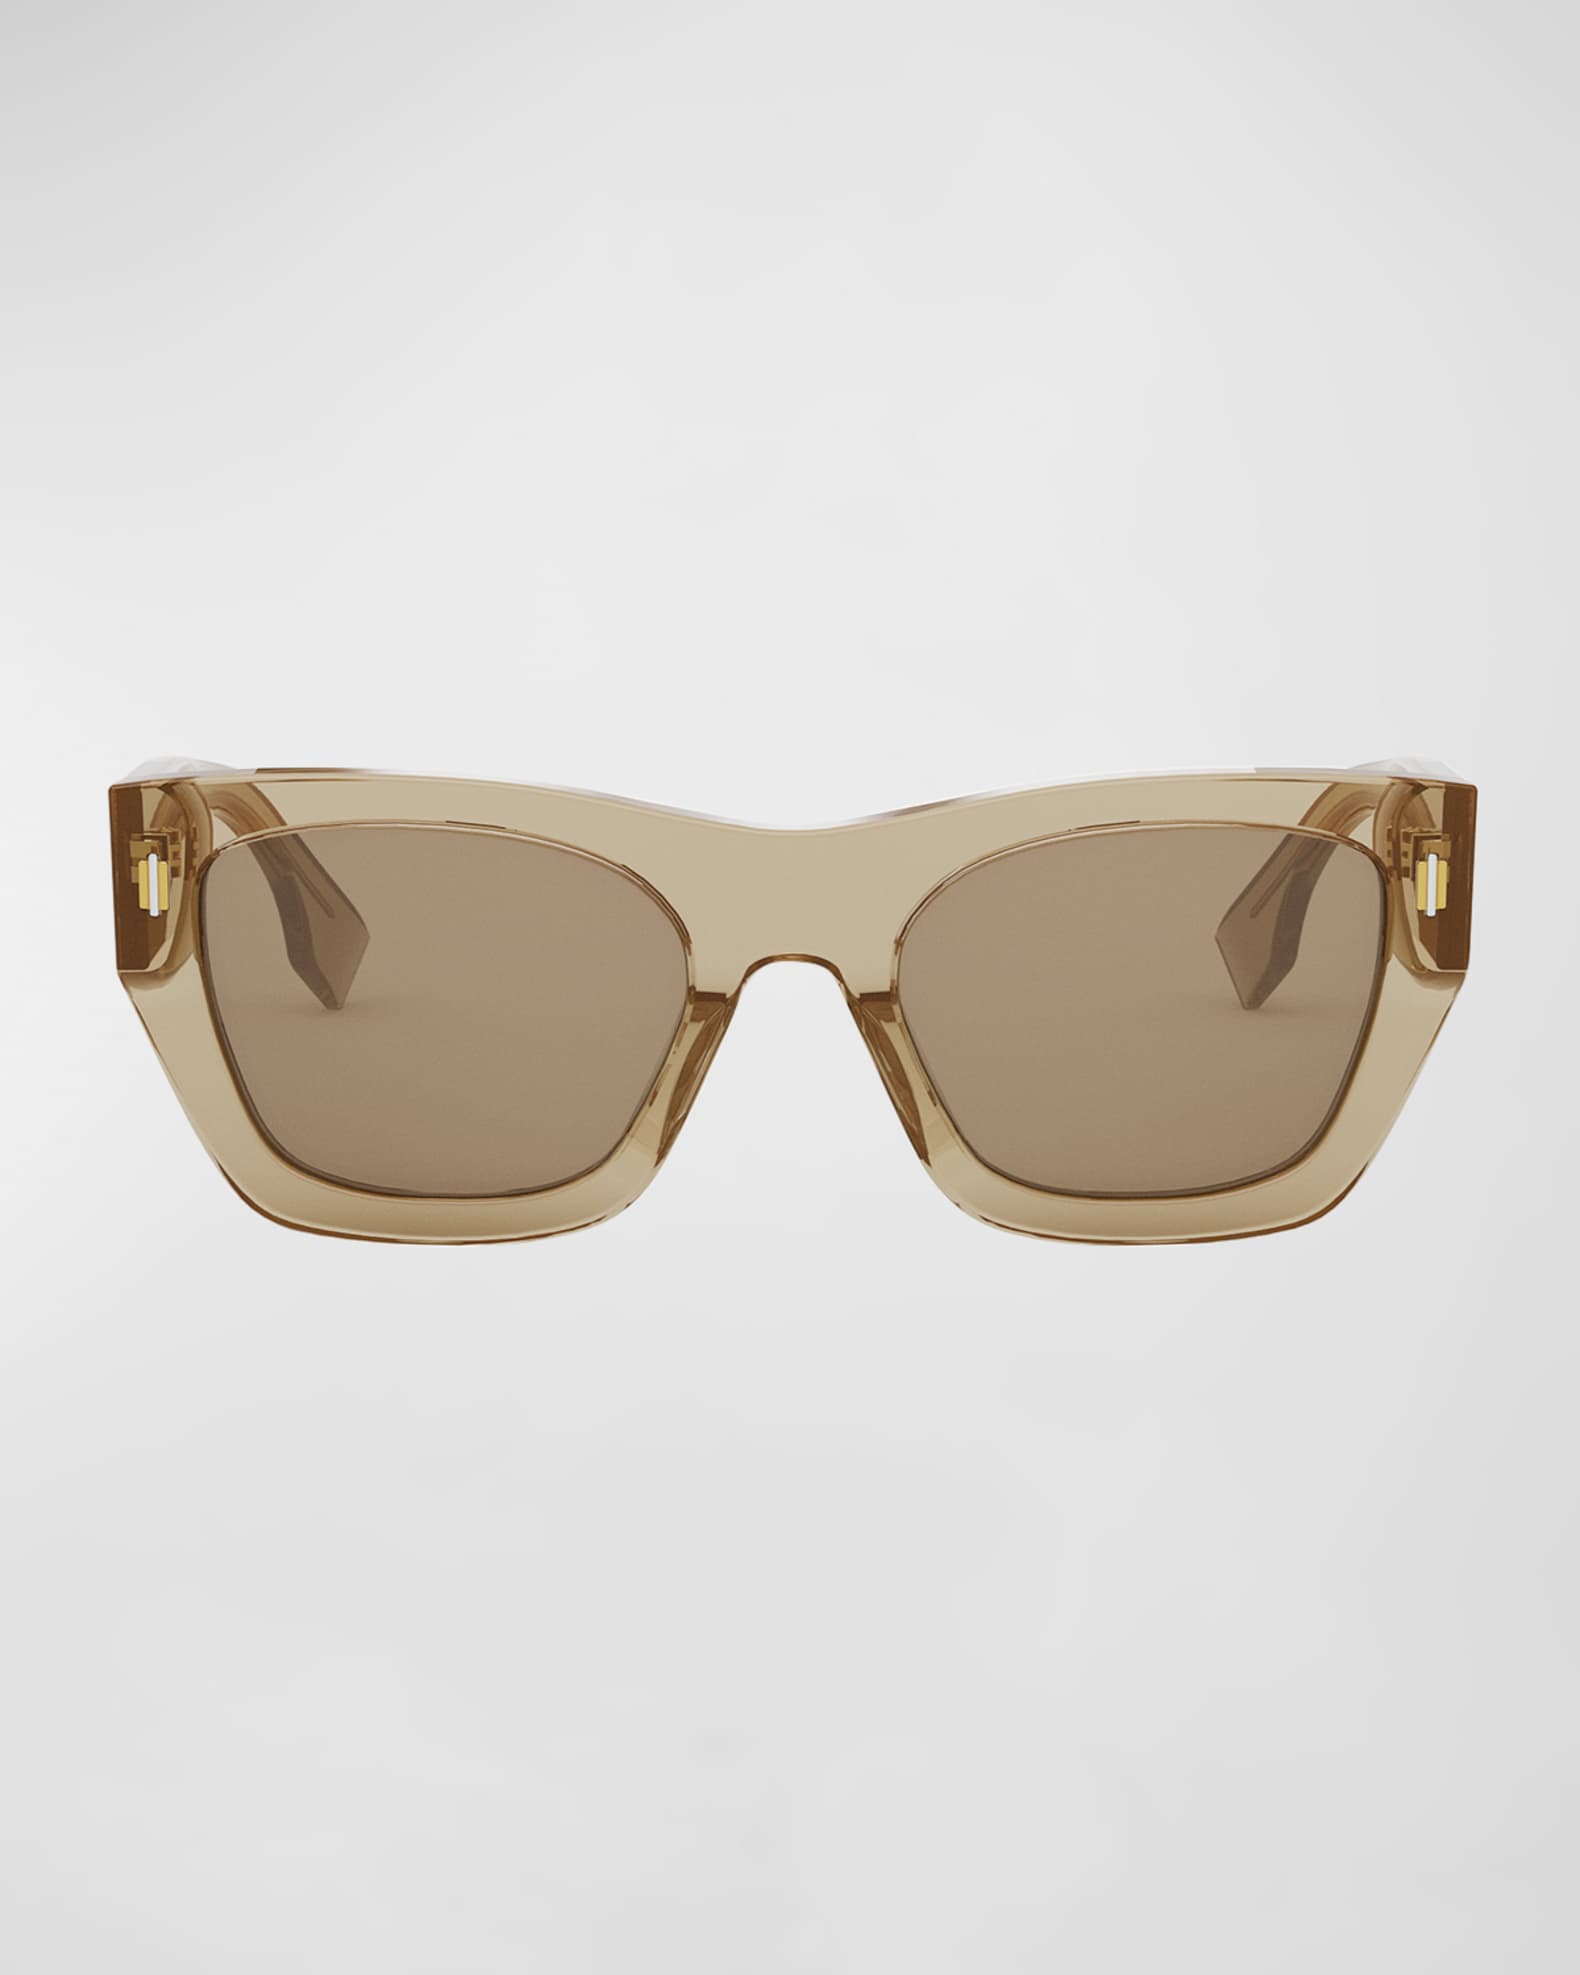 Fendi - Fendi Roma - Cat-Eye Sunglasses - Havana - Sunglasses